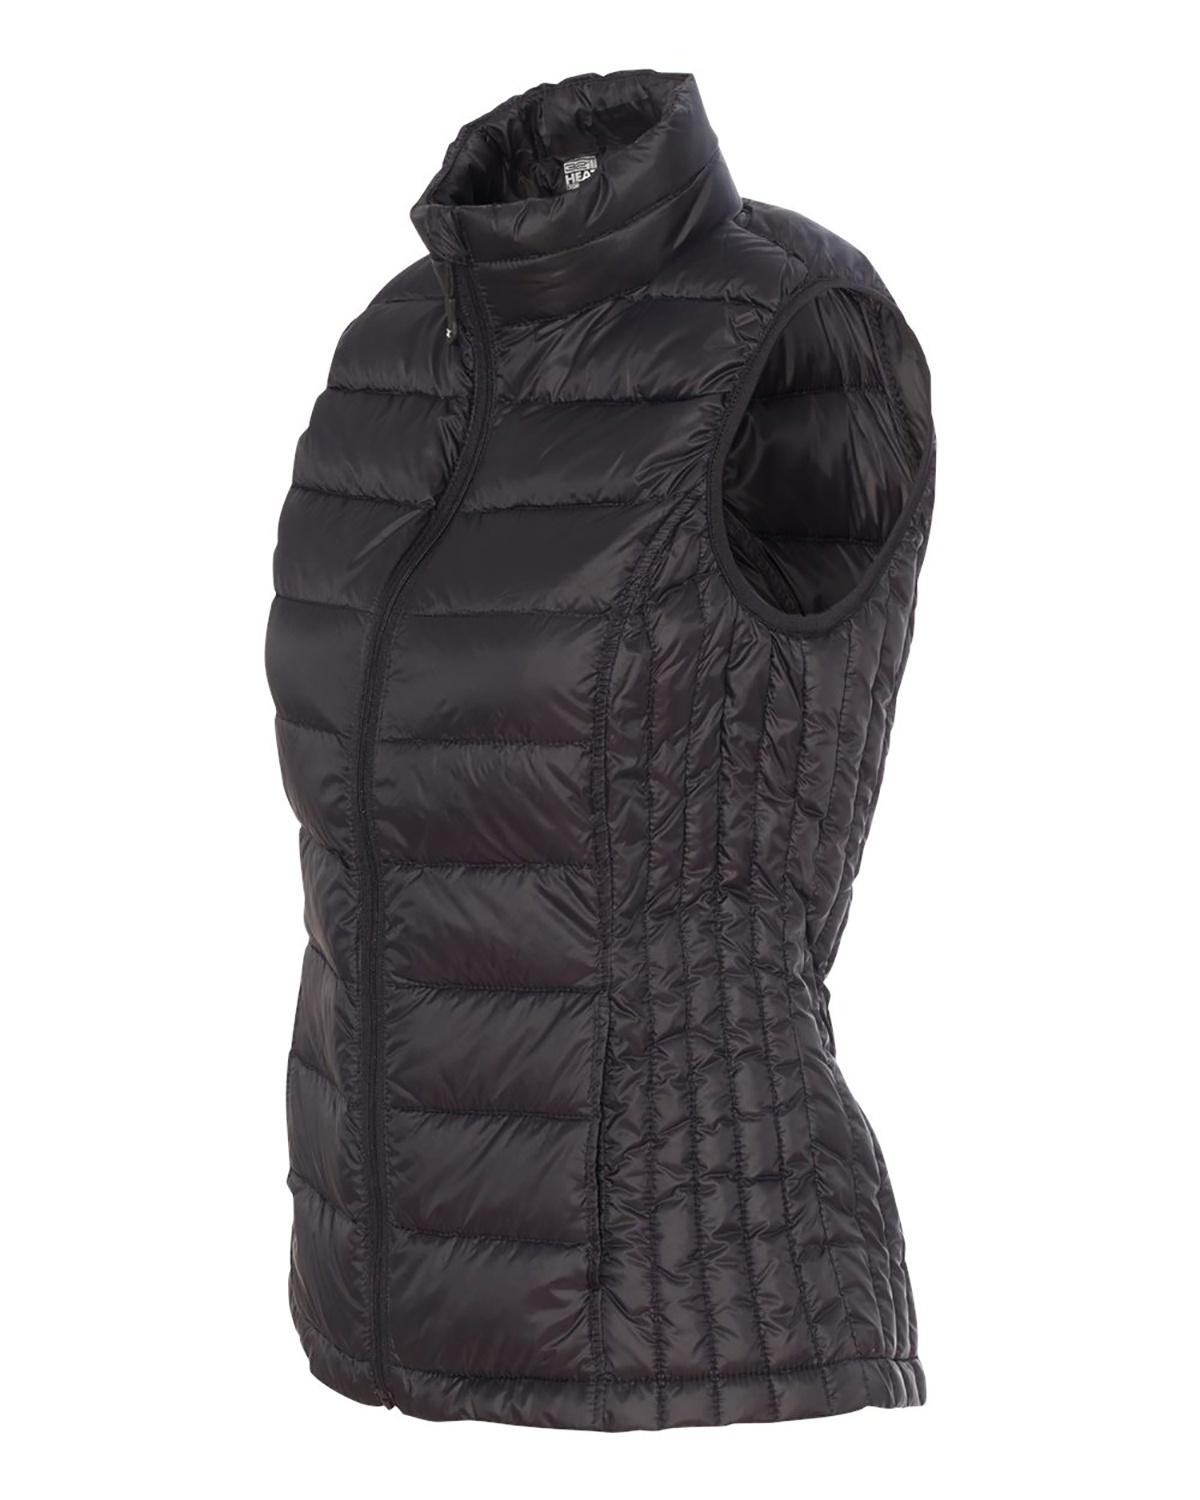 'Weatherproof 16700W 32 Degrees Women's Packable Down Vest'